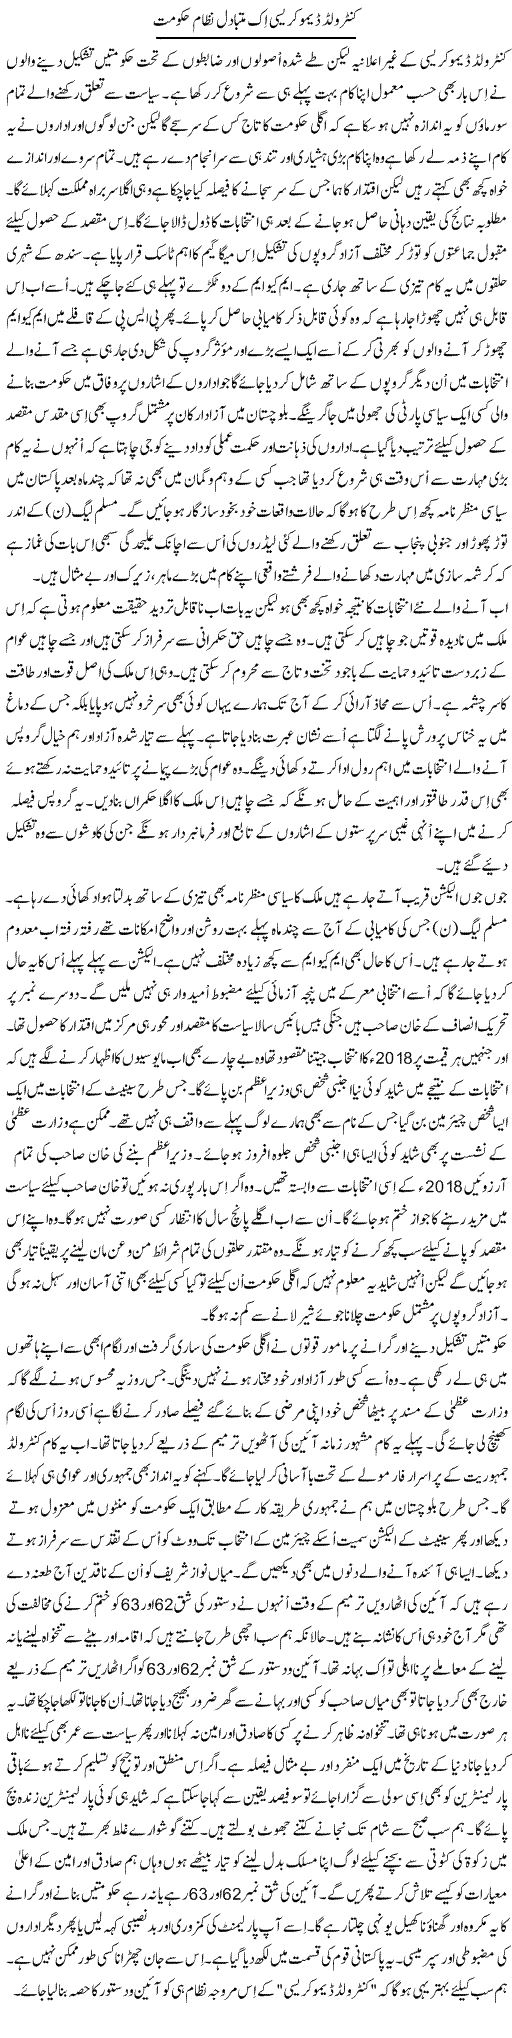 Controlled Democracy Ik Mutabadil Nizam Hukumat | Dr. Mansoor Noorani | Daily Urdu Columns